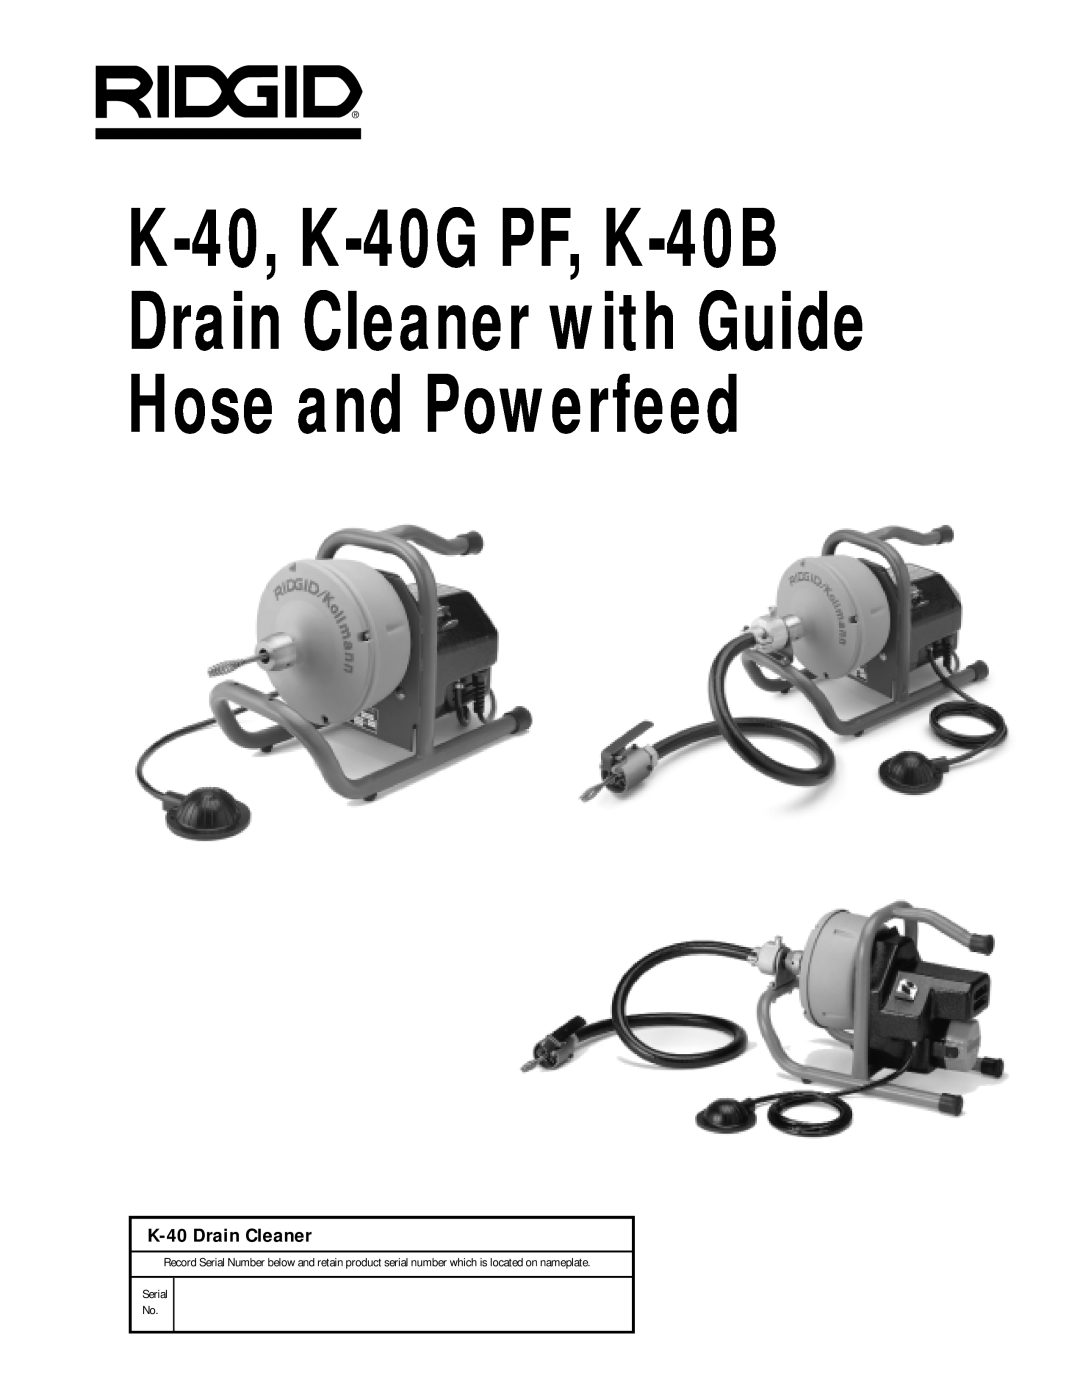 RIDGID K-40B, K-40G PF manual K-40Drain Cleaner, Serial No 